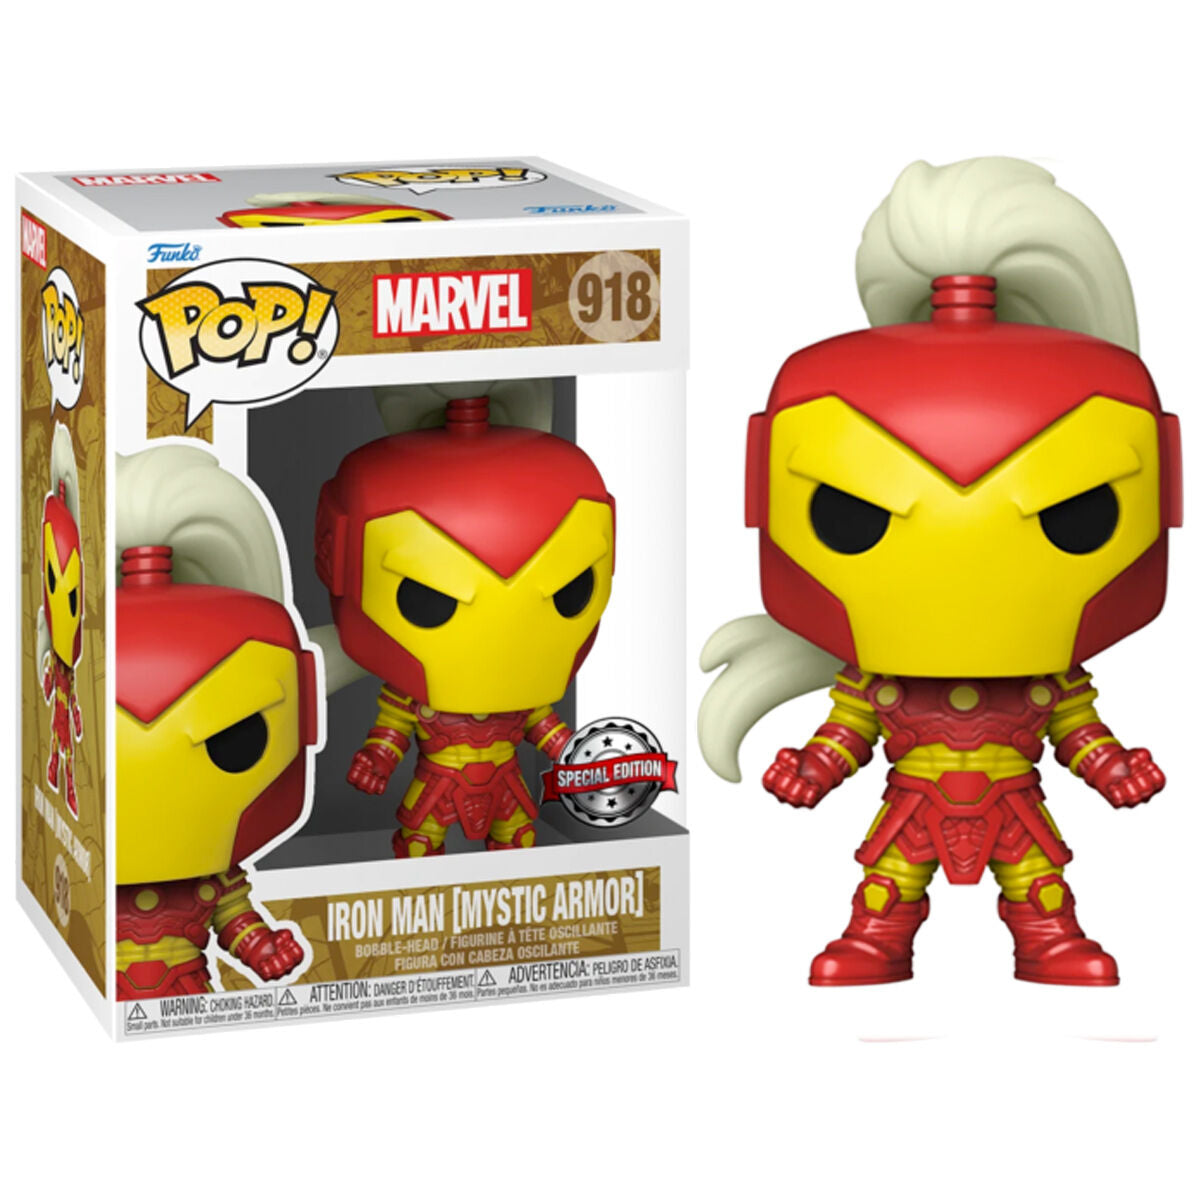 Iron Man (Mystic Armor)